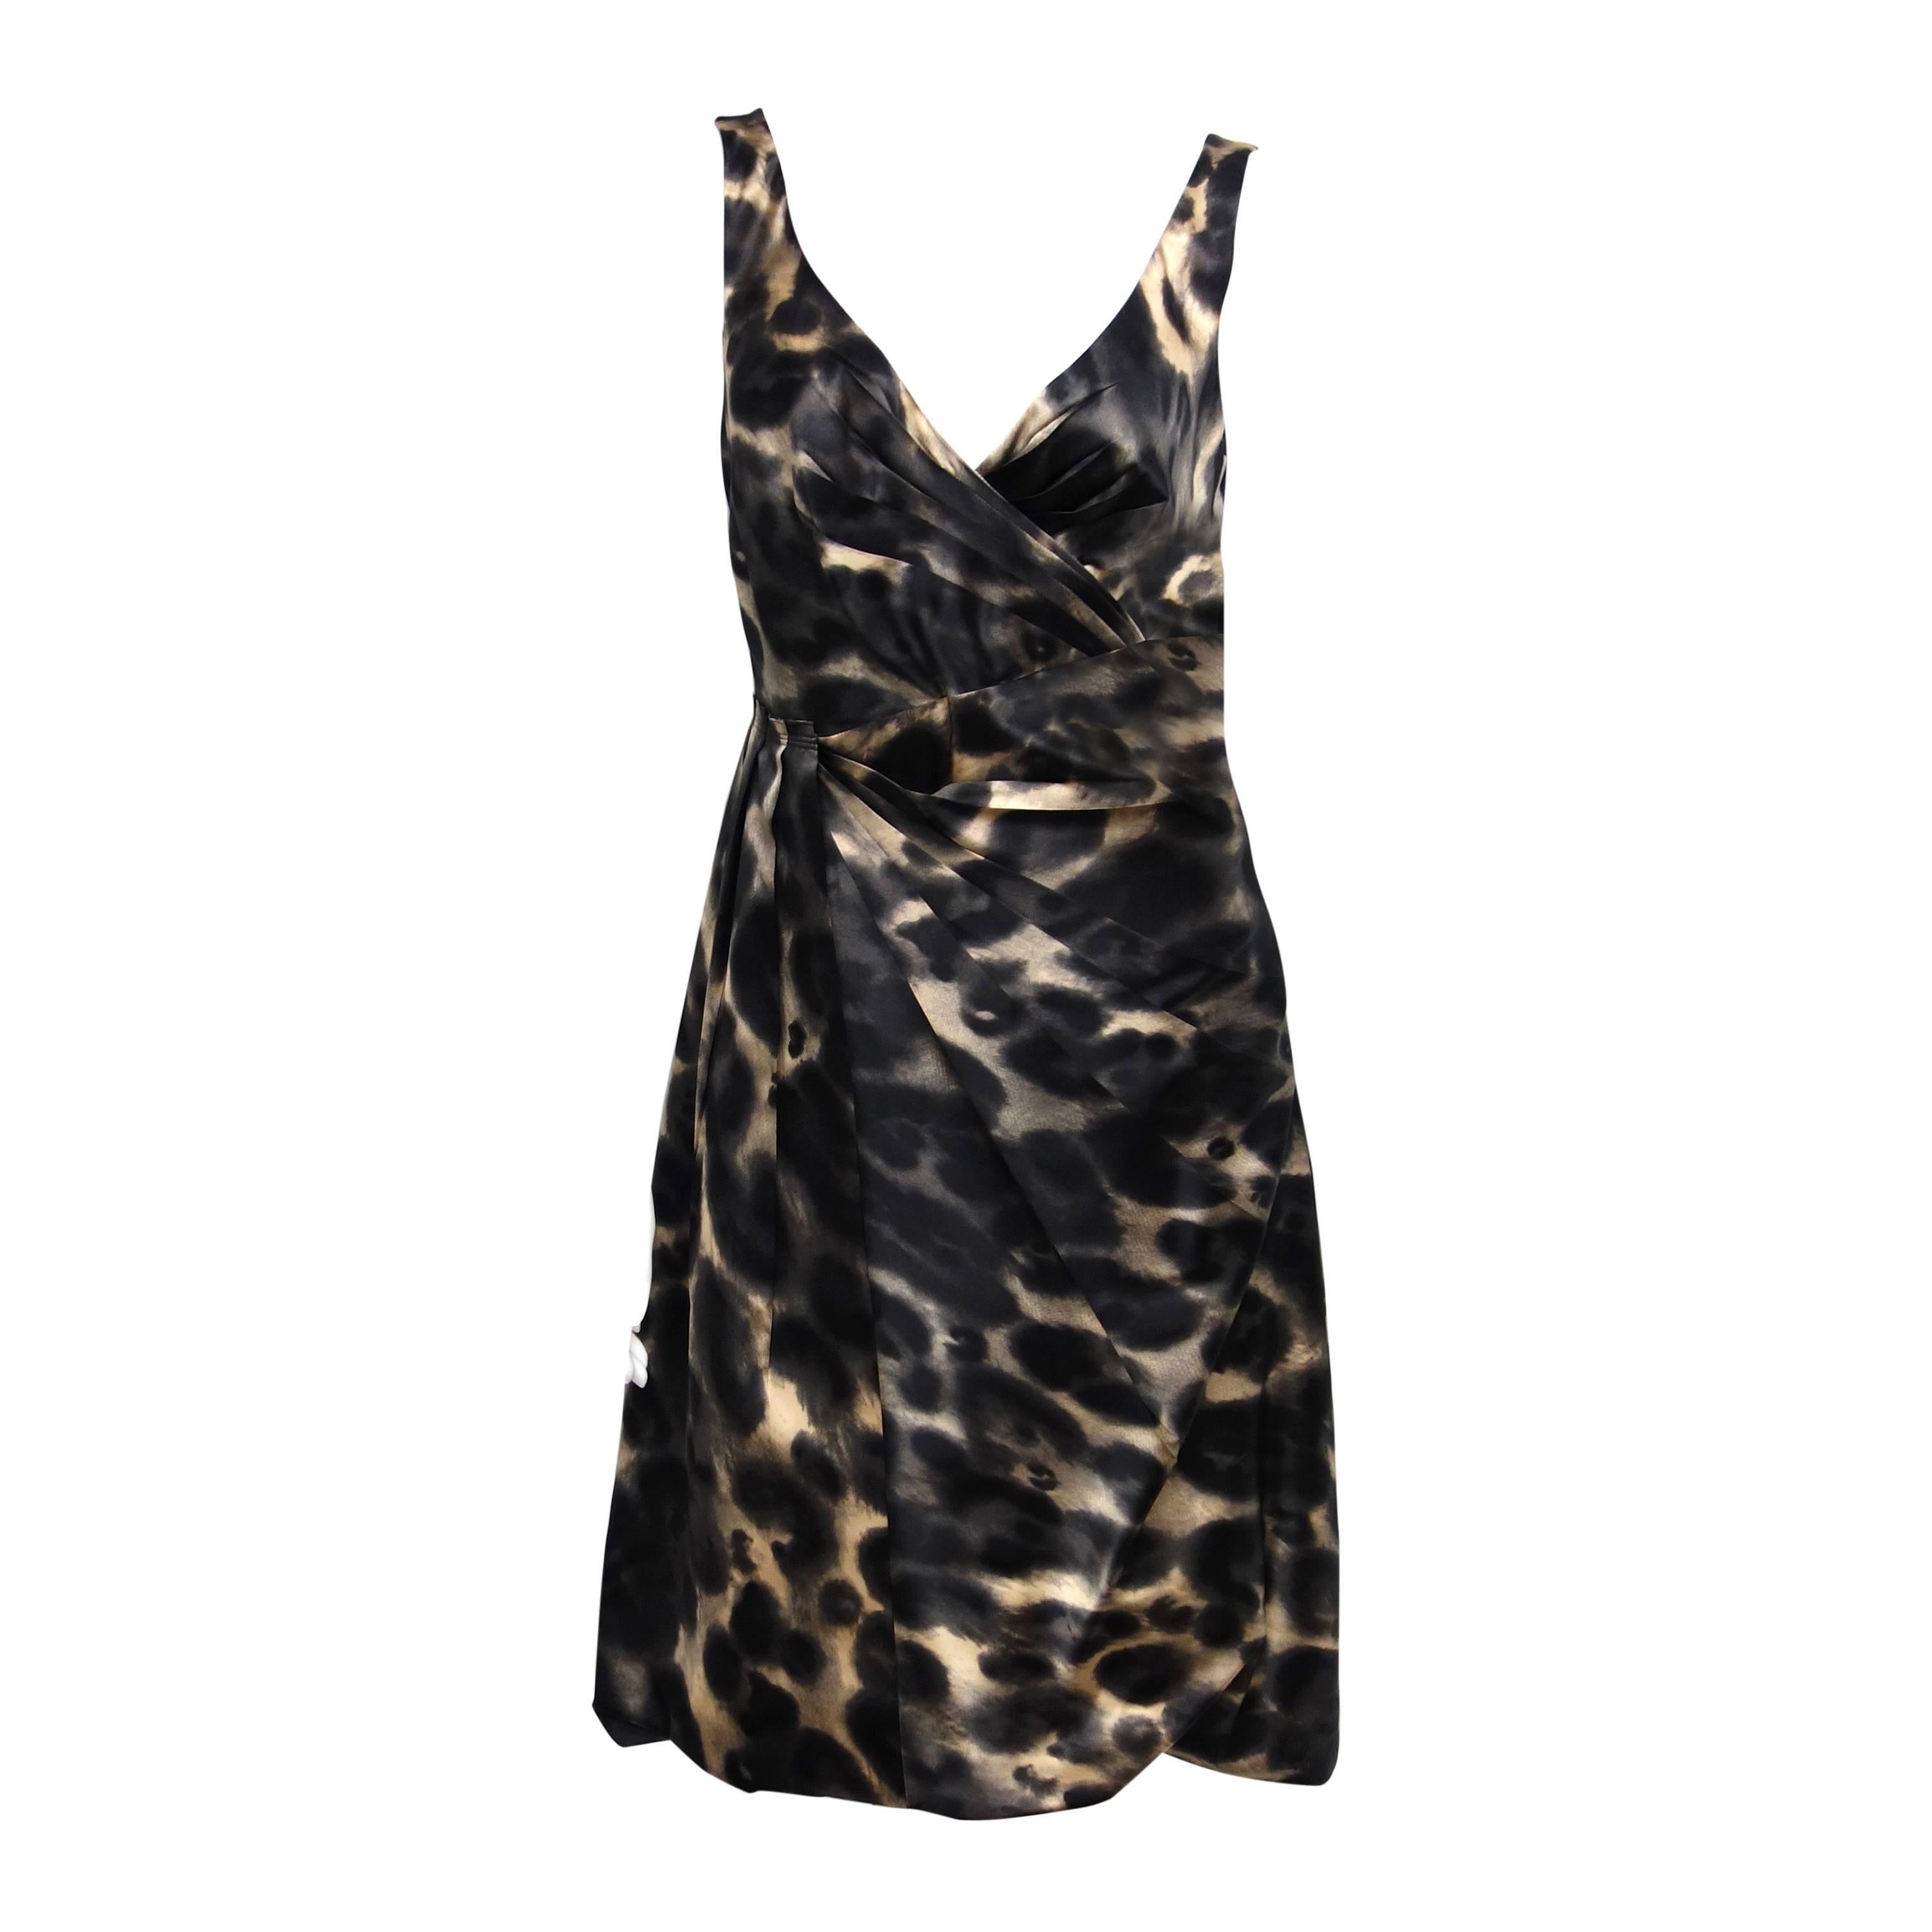 PRADA Silk Sleeveless Animal Print Dress Size 44